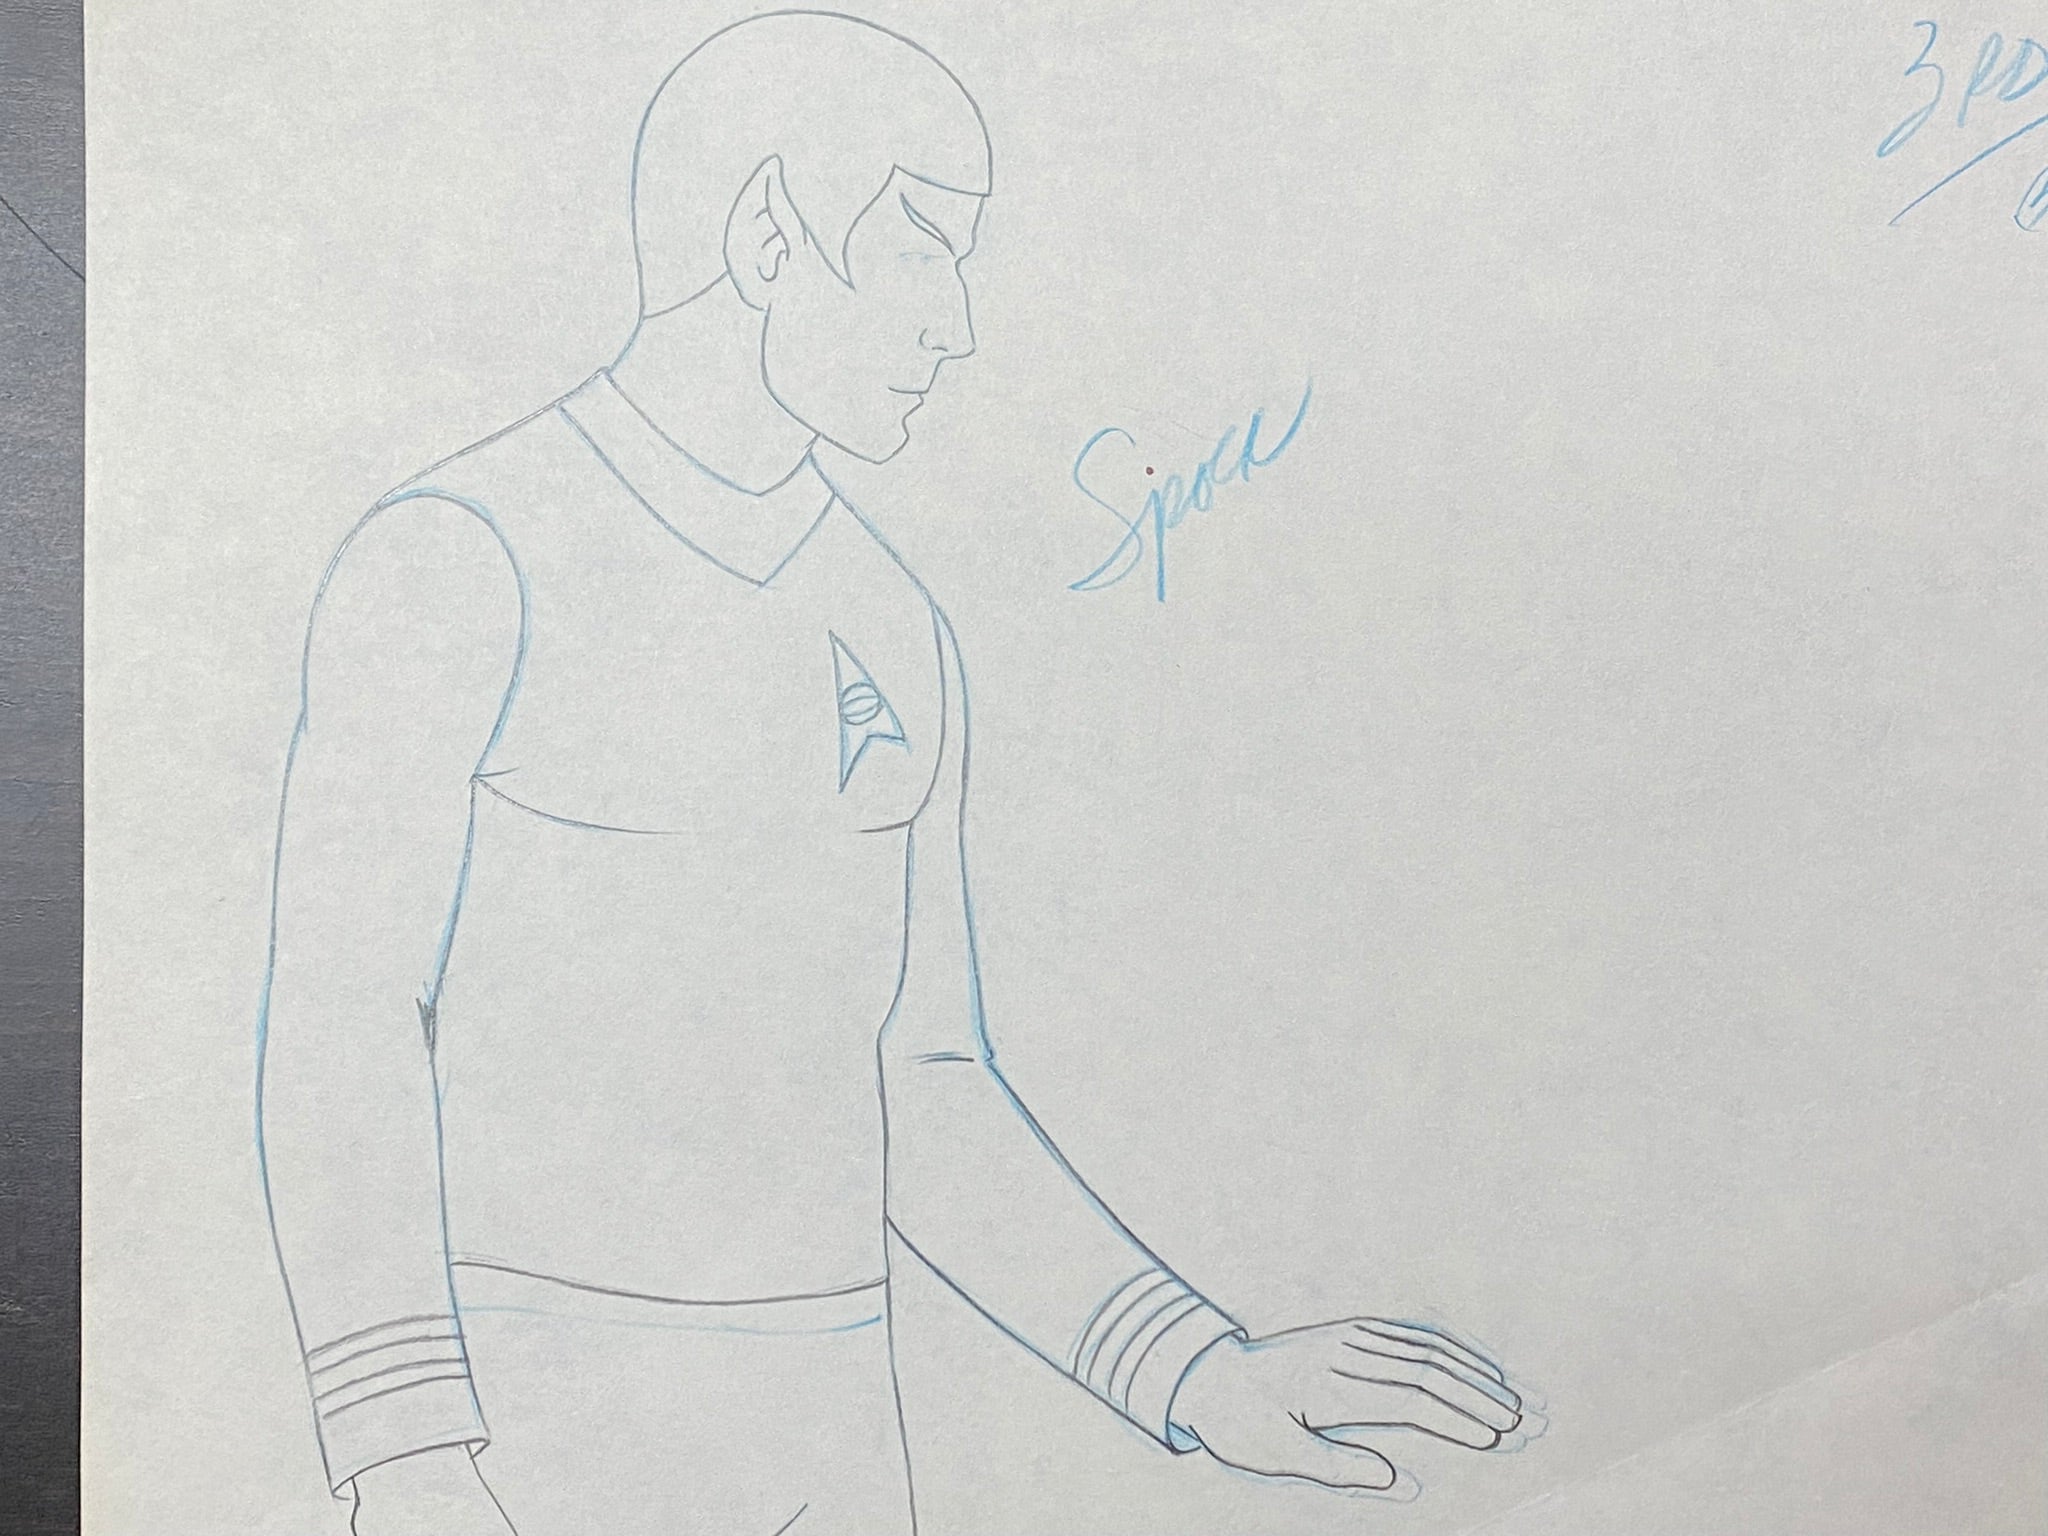 Spock Watercolor on Behance